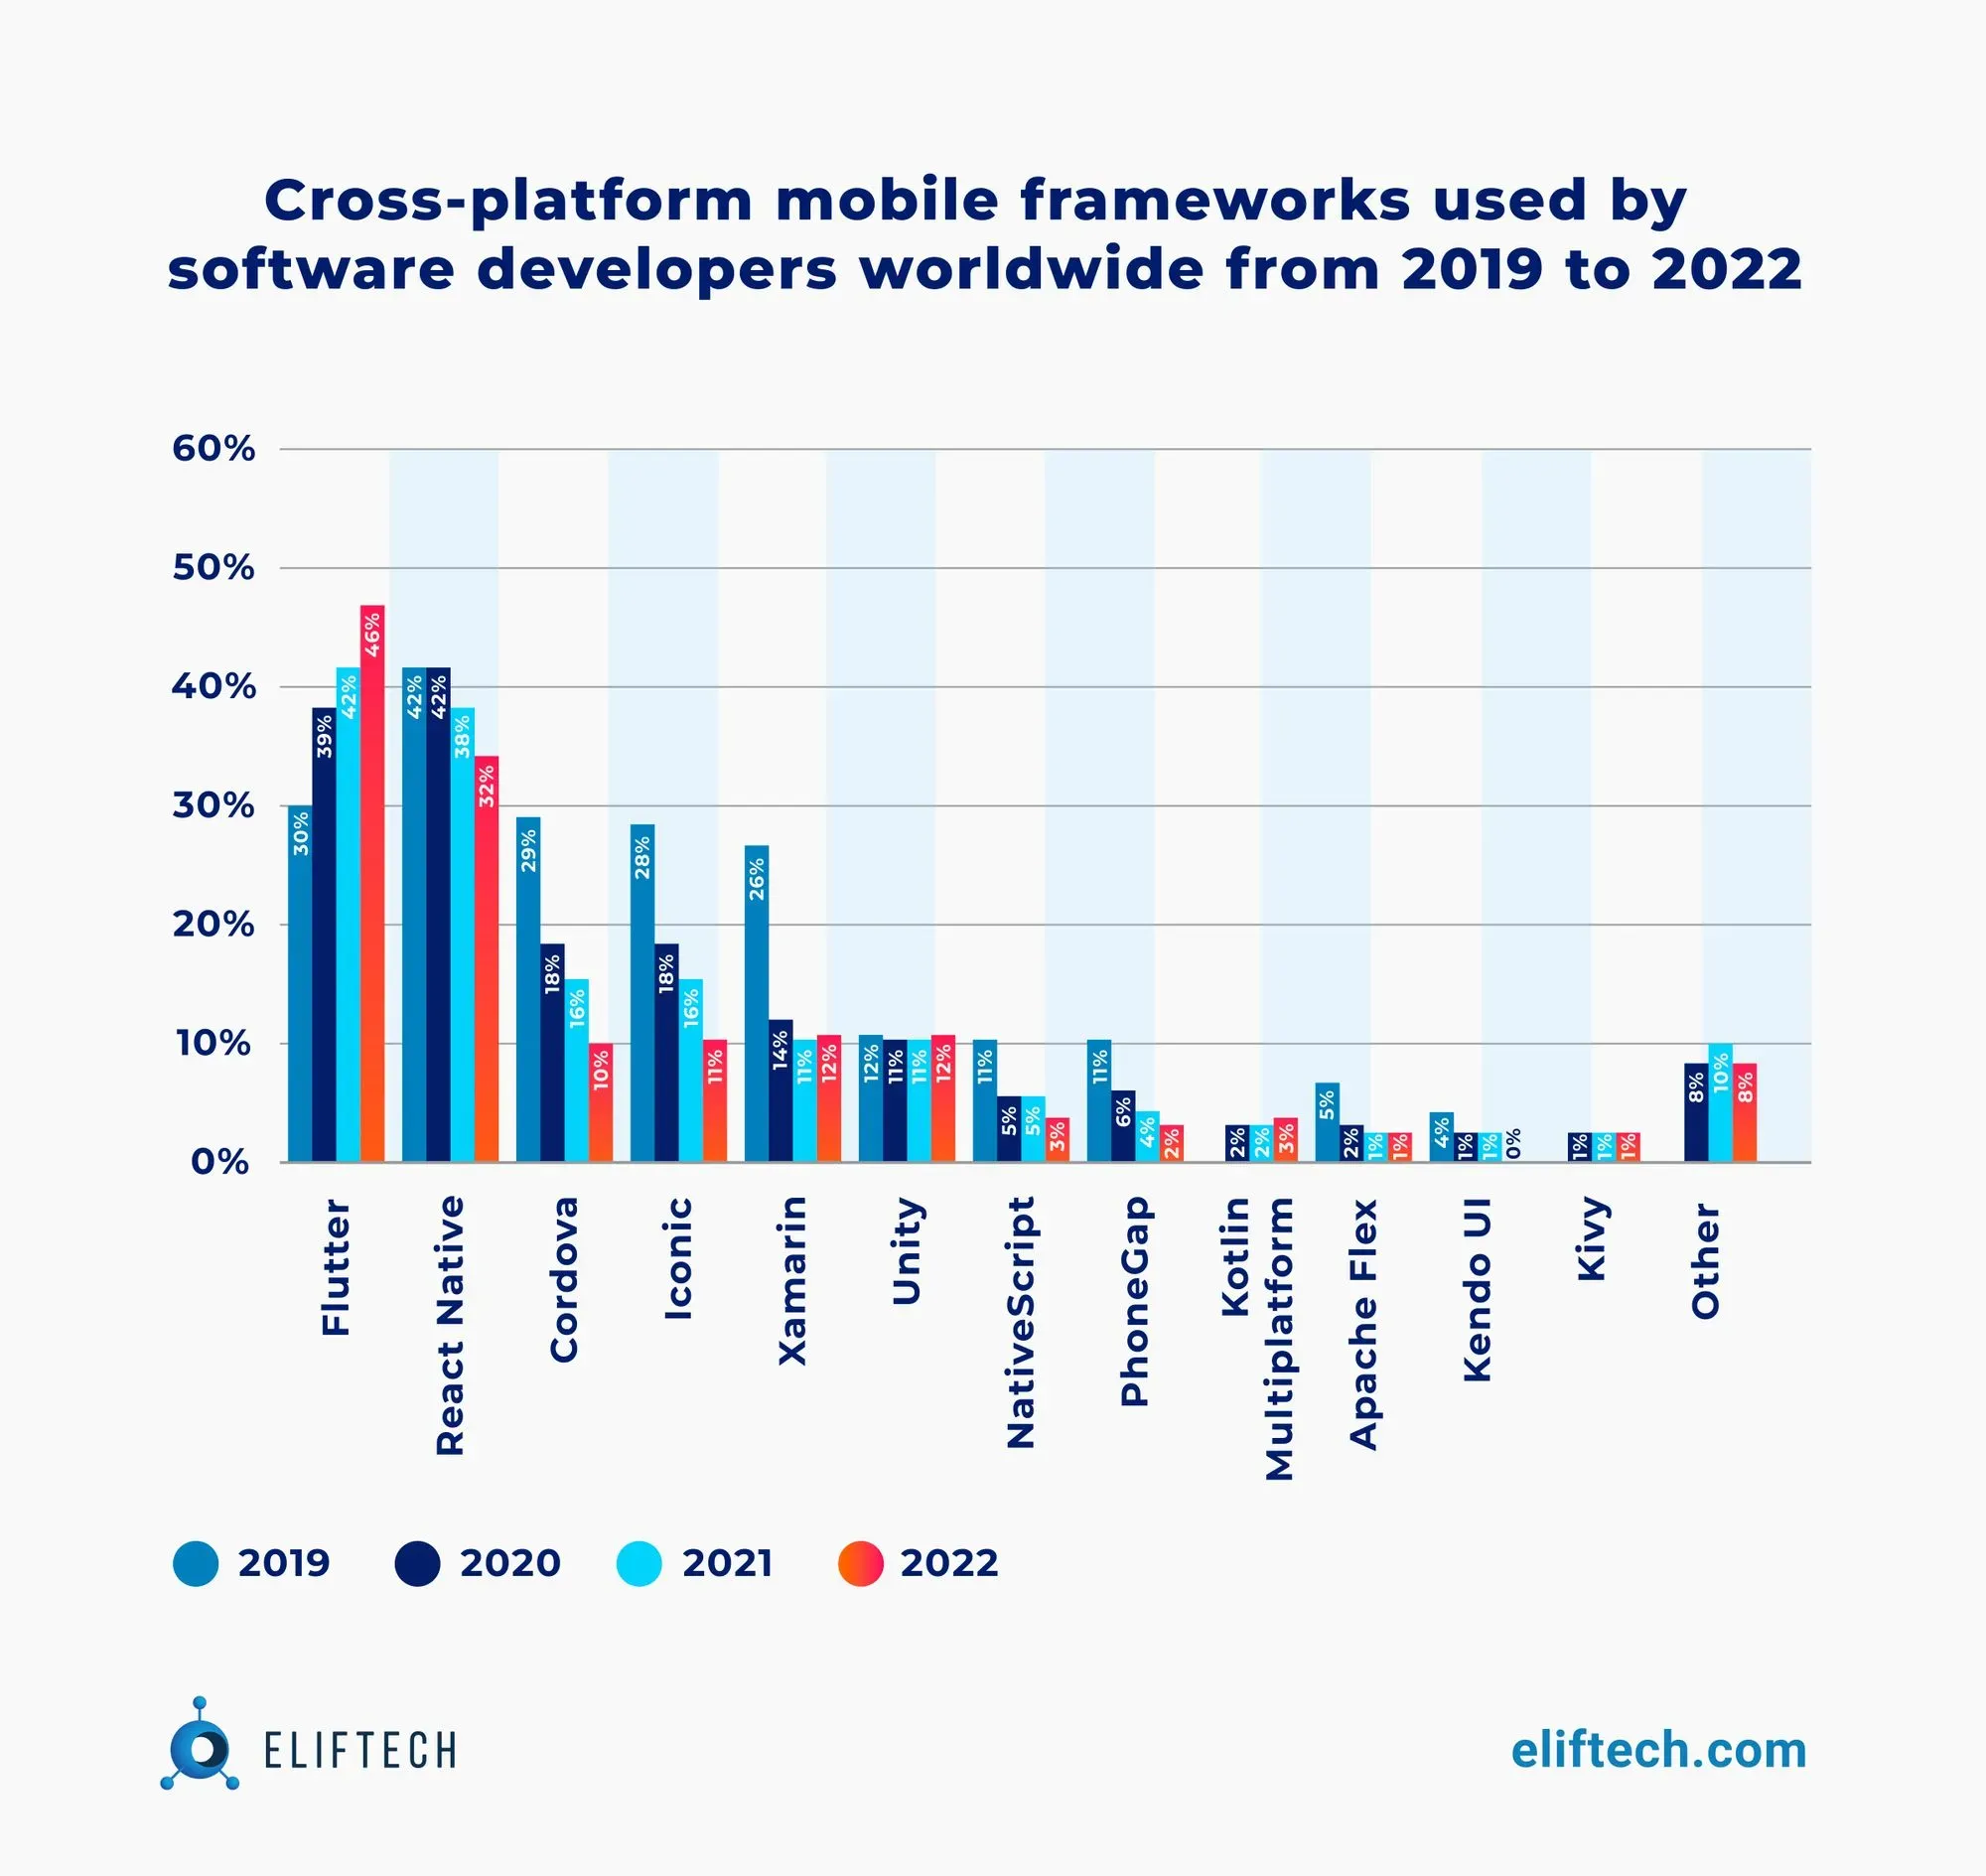 Cross-Platform Mobile Framework Adoption by Software Developers Worldwide: 2019-2022